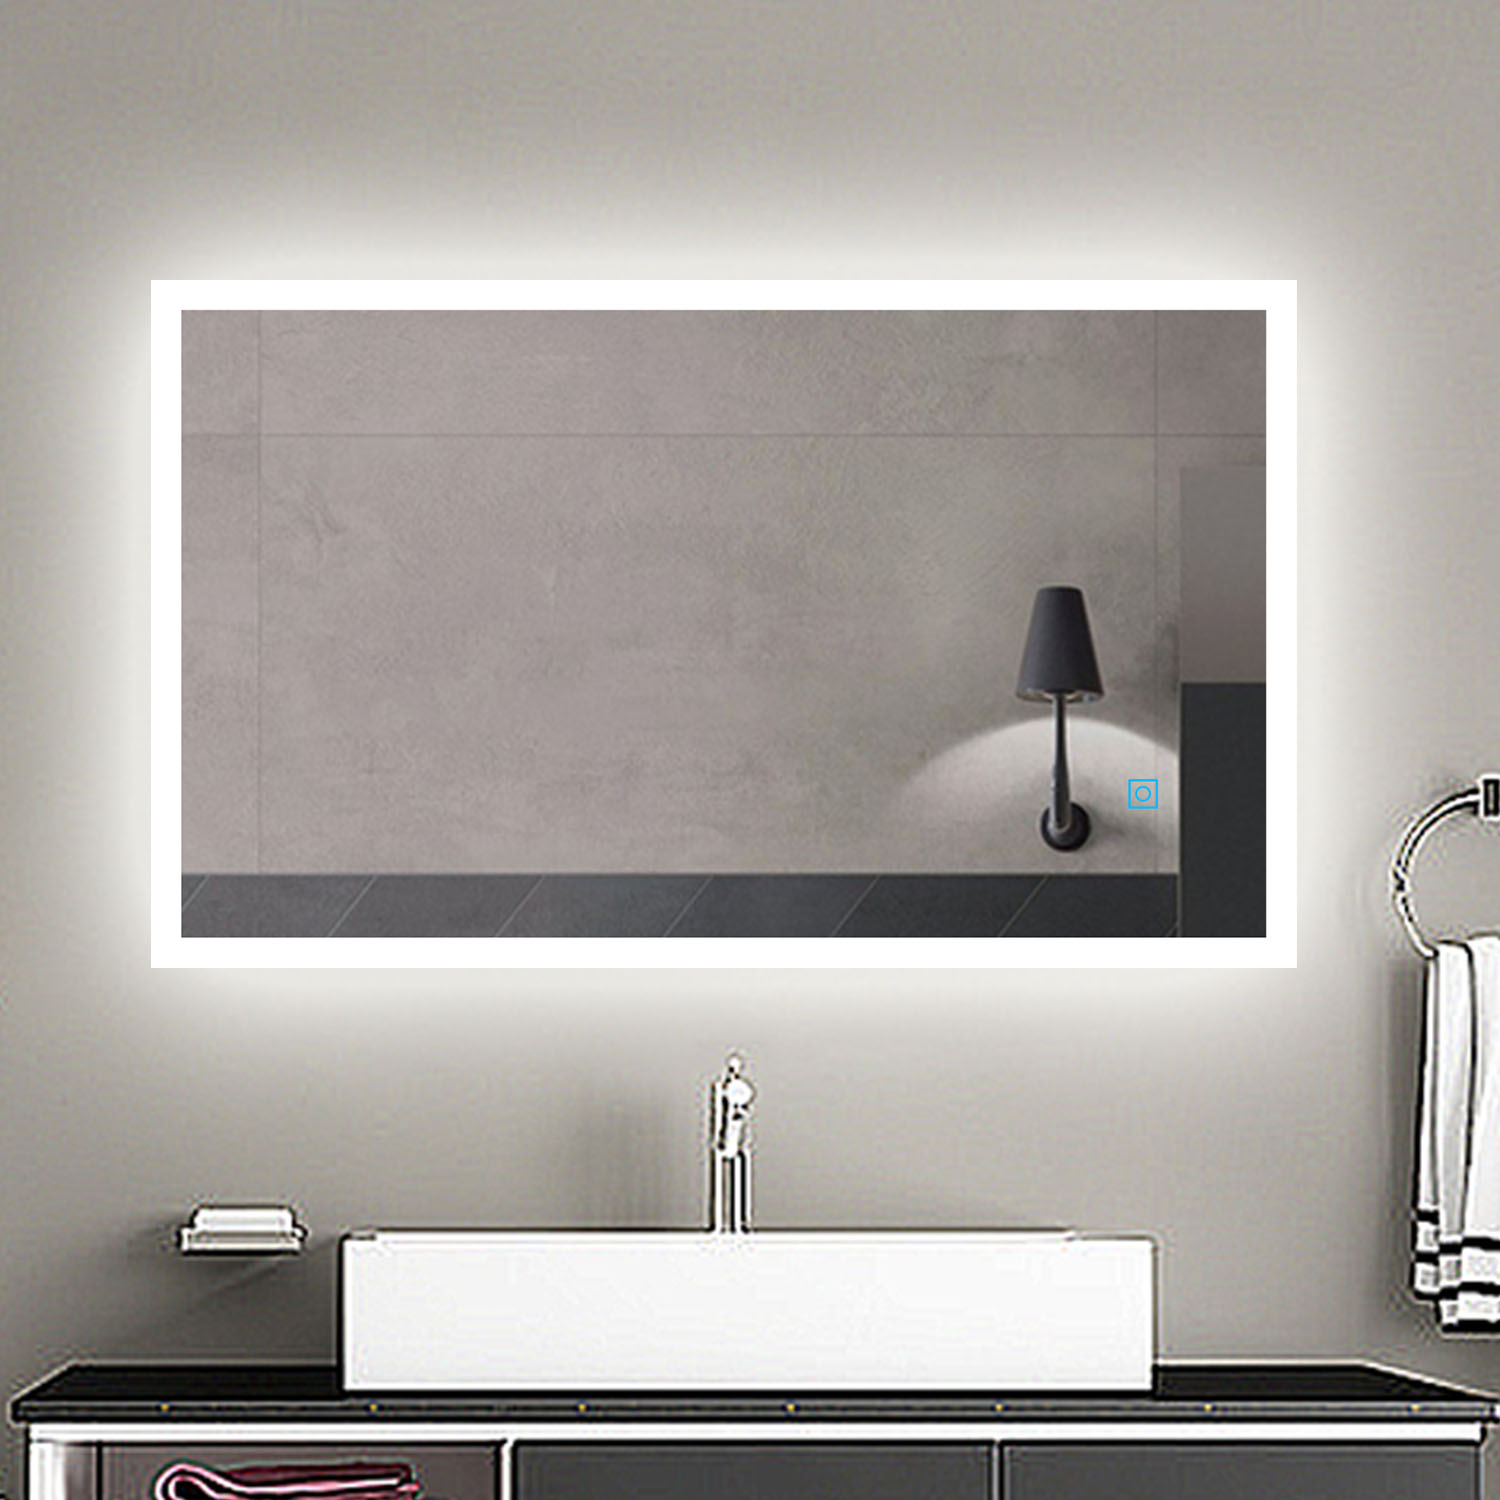 Led Bathroom Mirror Light Illuminated Demister Pad Touch Control Wall Mount Ip44 Ebay 